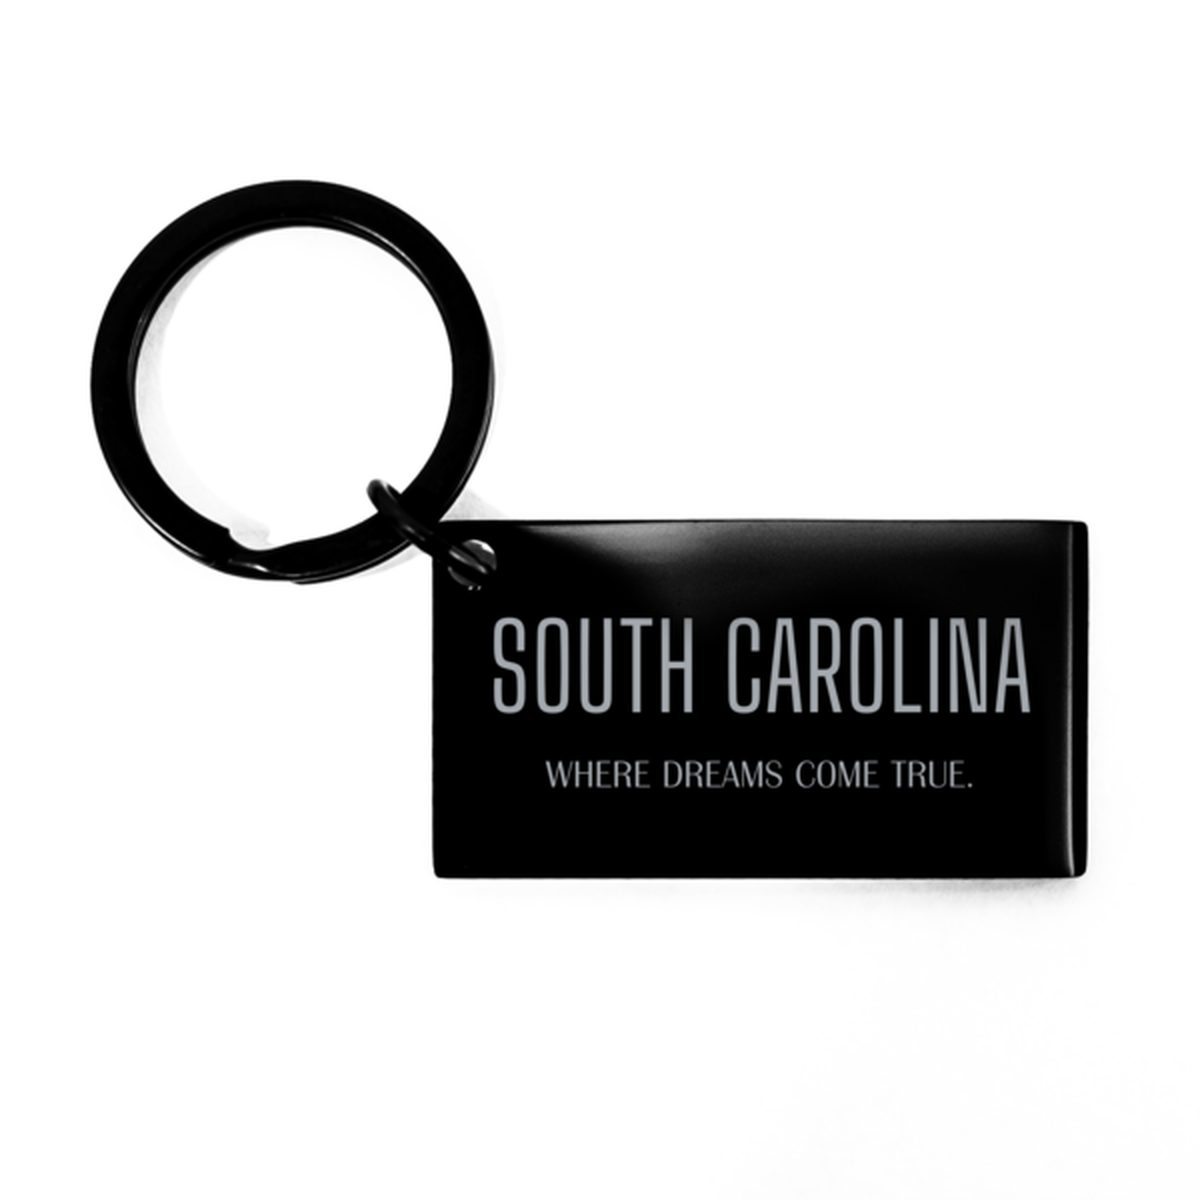 Love South Carolina State Keychain, South Carolina Where dreams come true, Birthday Inspirational Gifts For South Carolina Men, Women, Friends